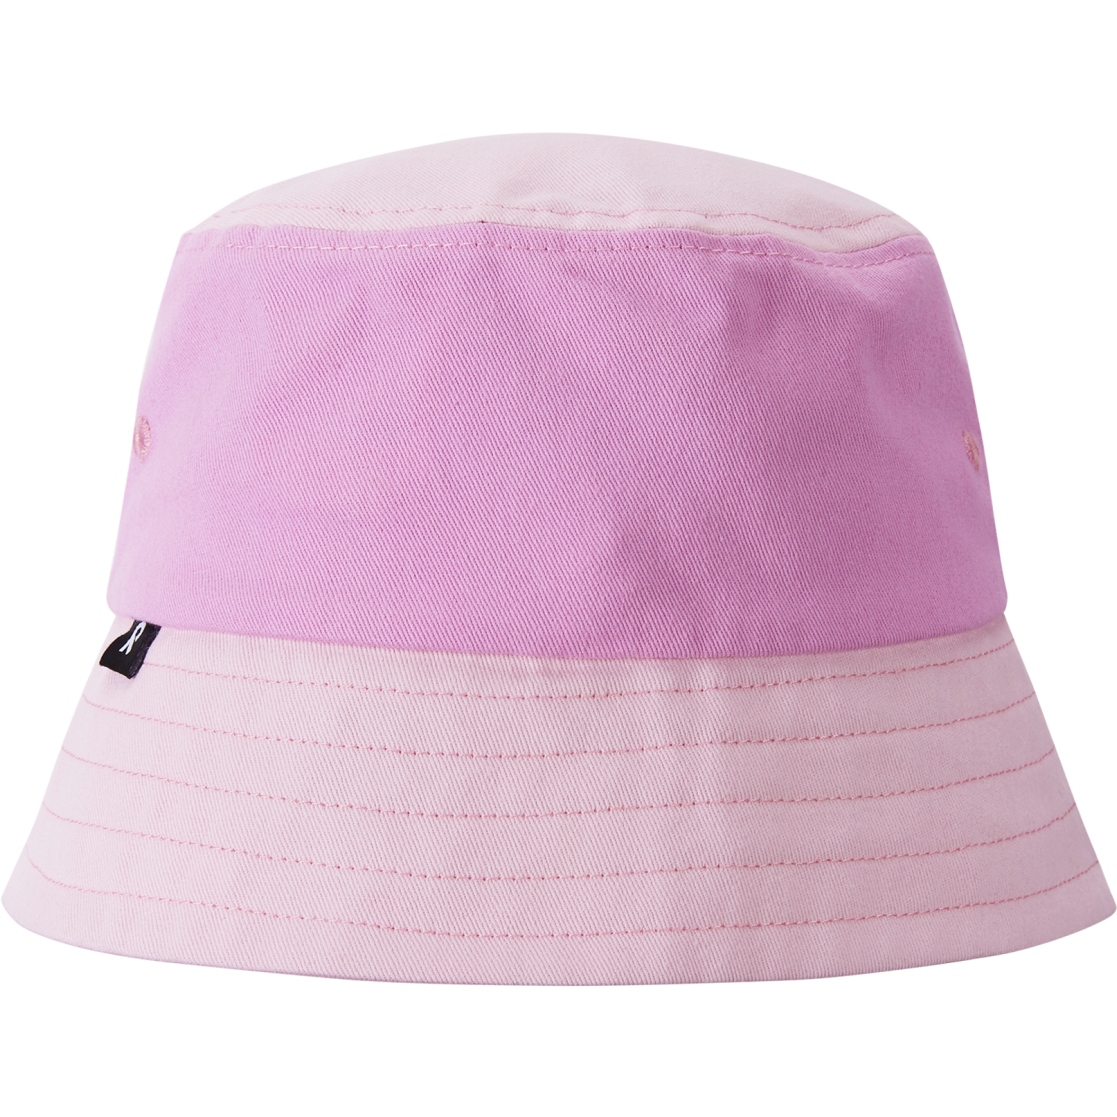 Reima Organic Cotton Bucket Hat - Siimaa Pink